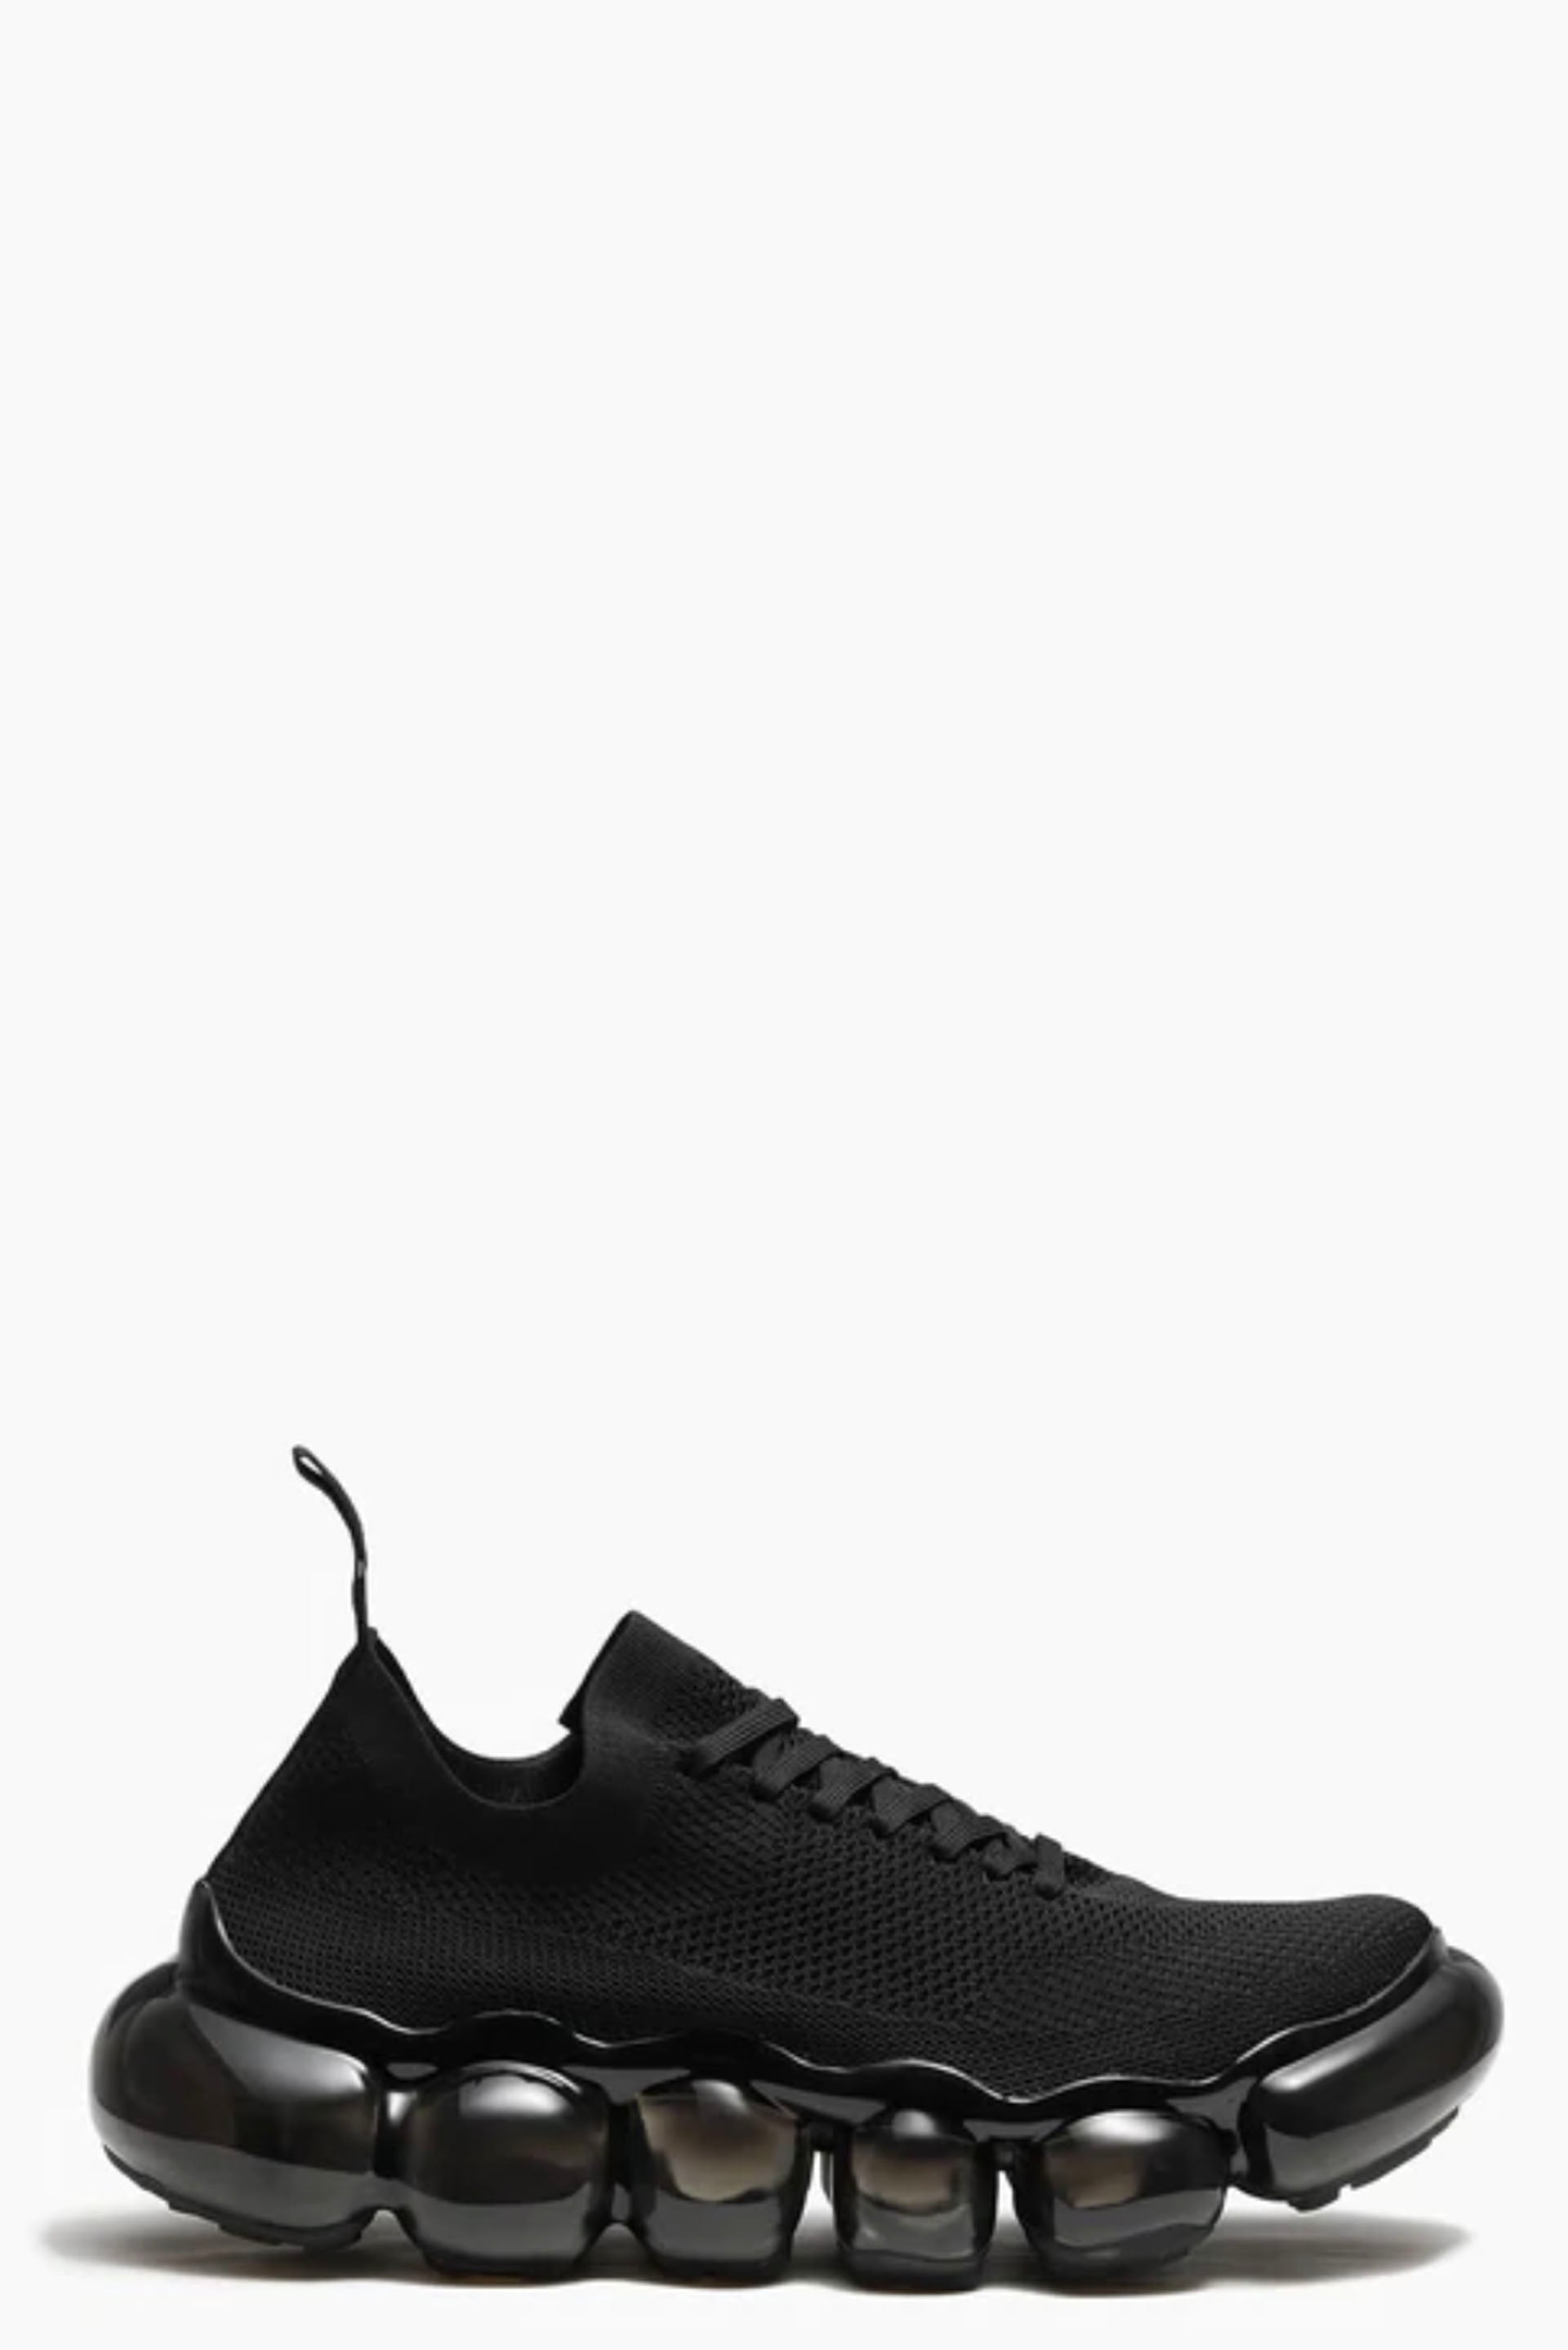 即納正規品grounds JEWELRY 27cm BLACK WHITE / BLACK 靴